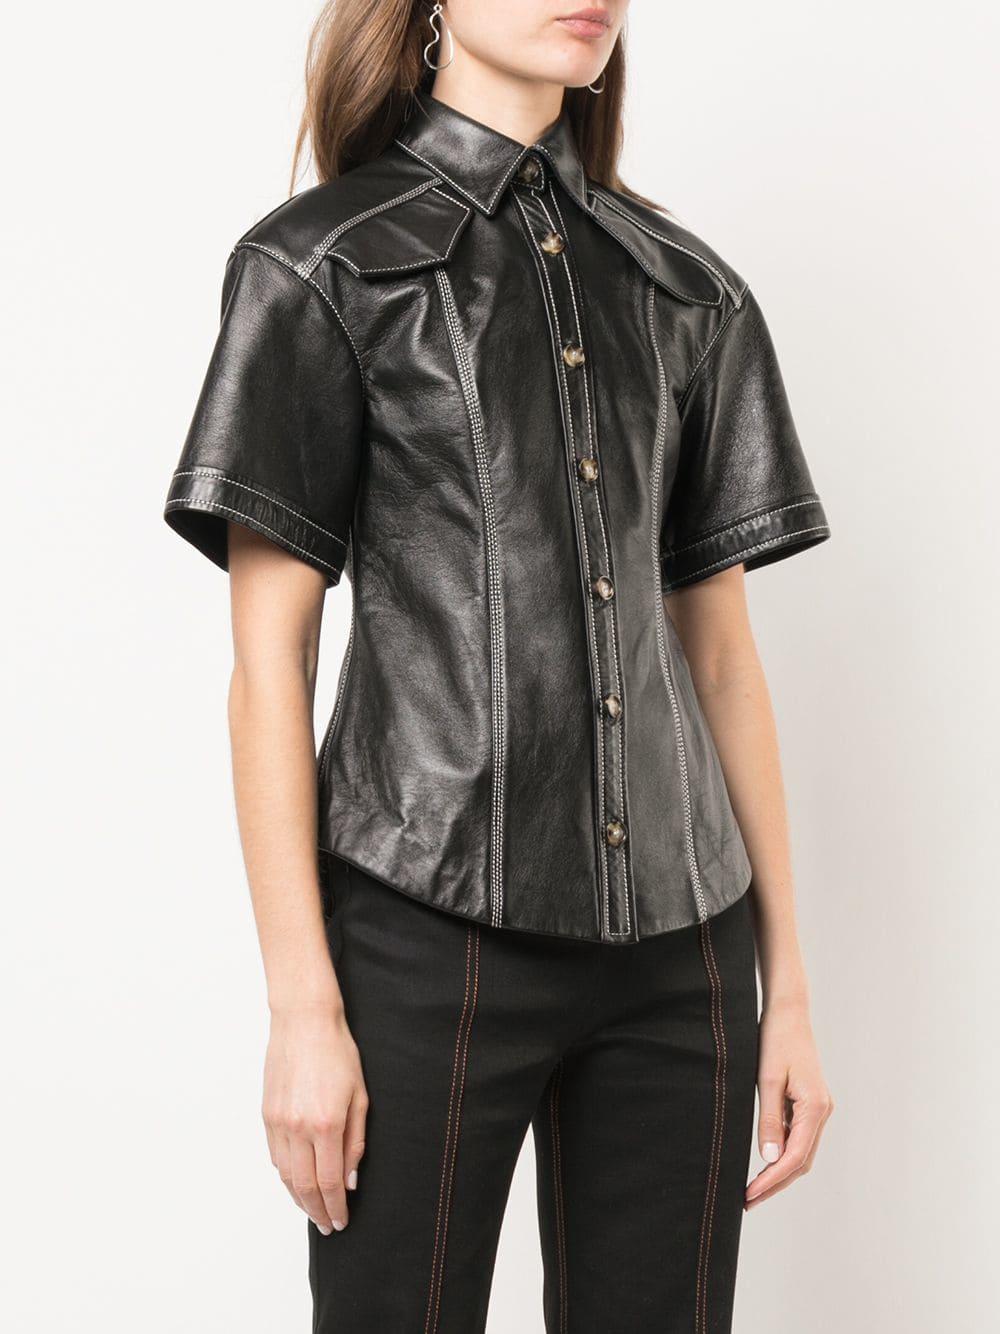 Proenza Schouler Leather Short Sleeve Top in Black - Lyst